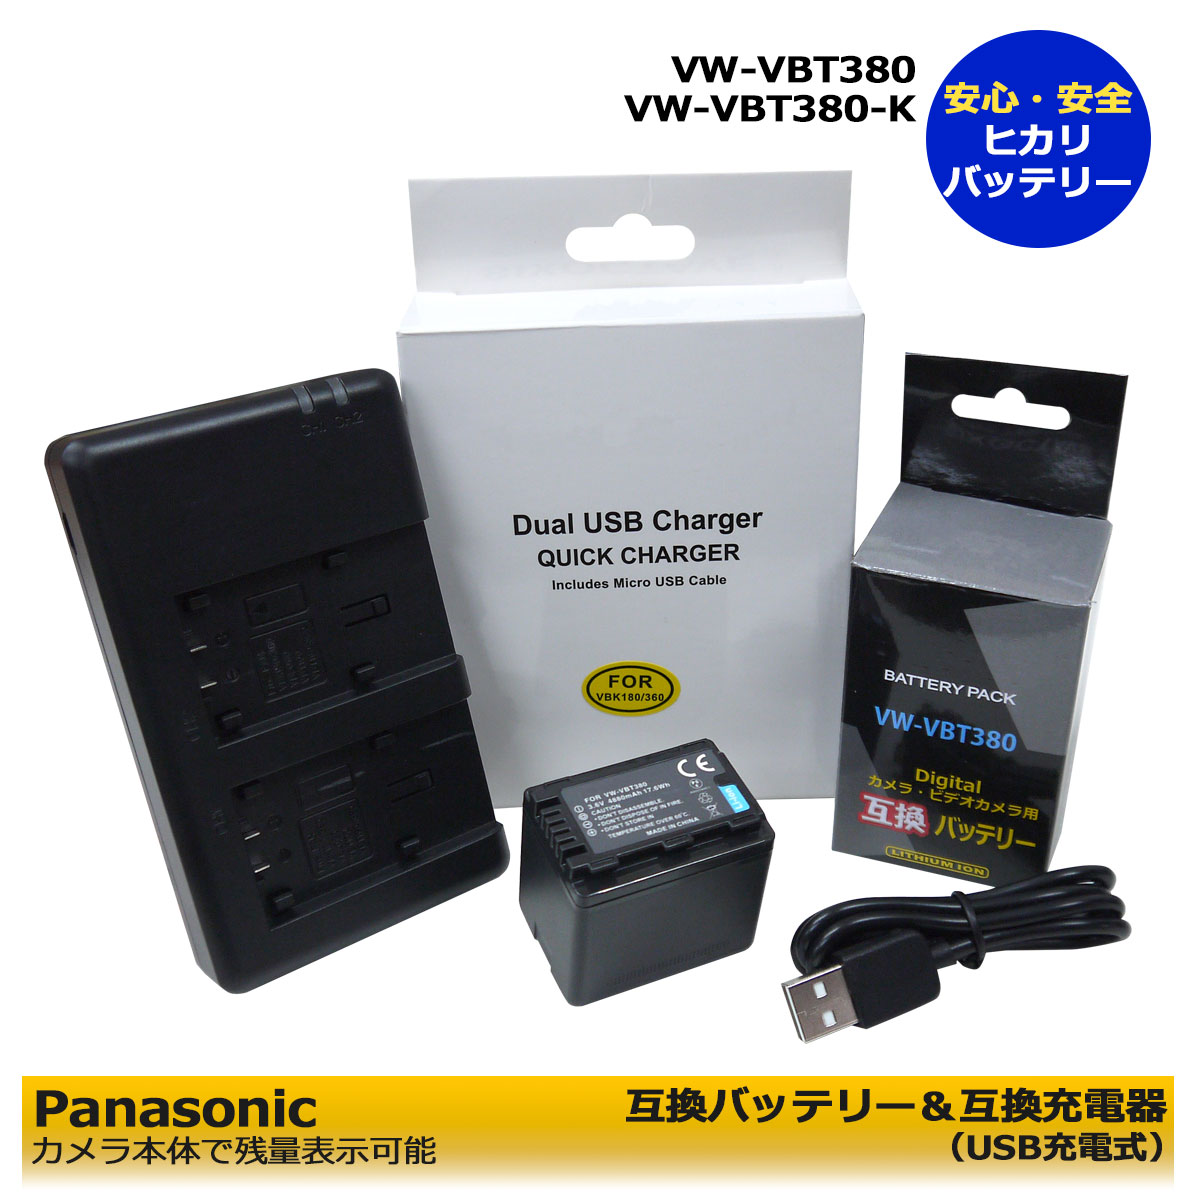 VW-VBT380 / VW-VBT380-K 【あす楽対応】 Panasonic  送料無料互換バッテリー1個とデュアル互換USB充電器の2点セットHC-W850M / HC-W870M / HC-WX970M / HC-WX990M  / HC-WX995M /